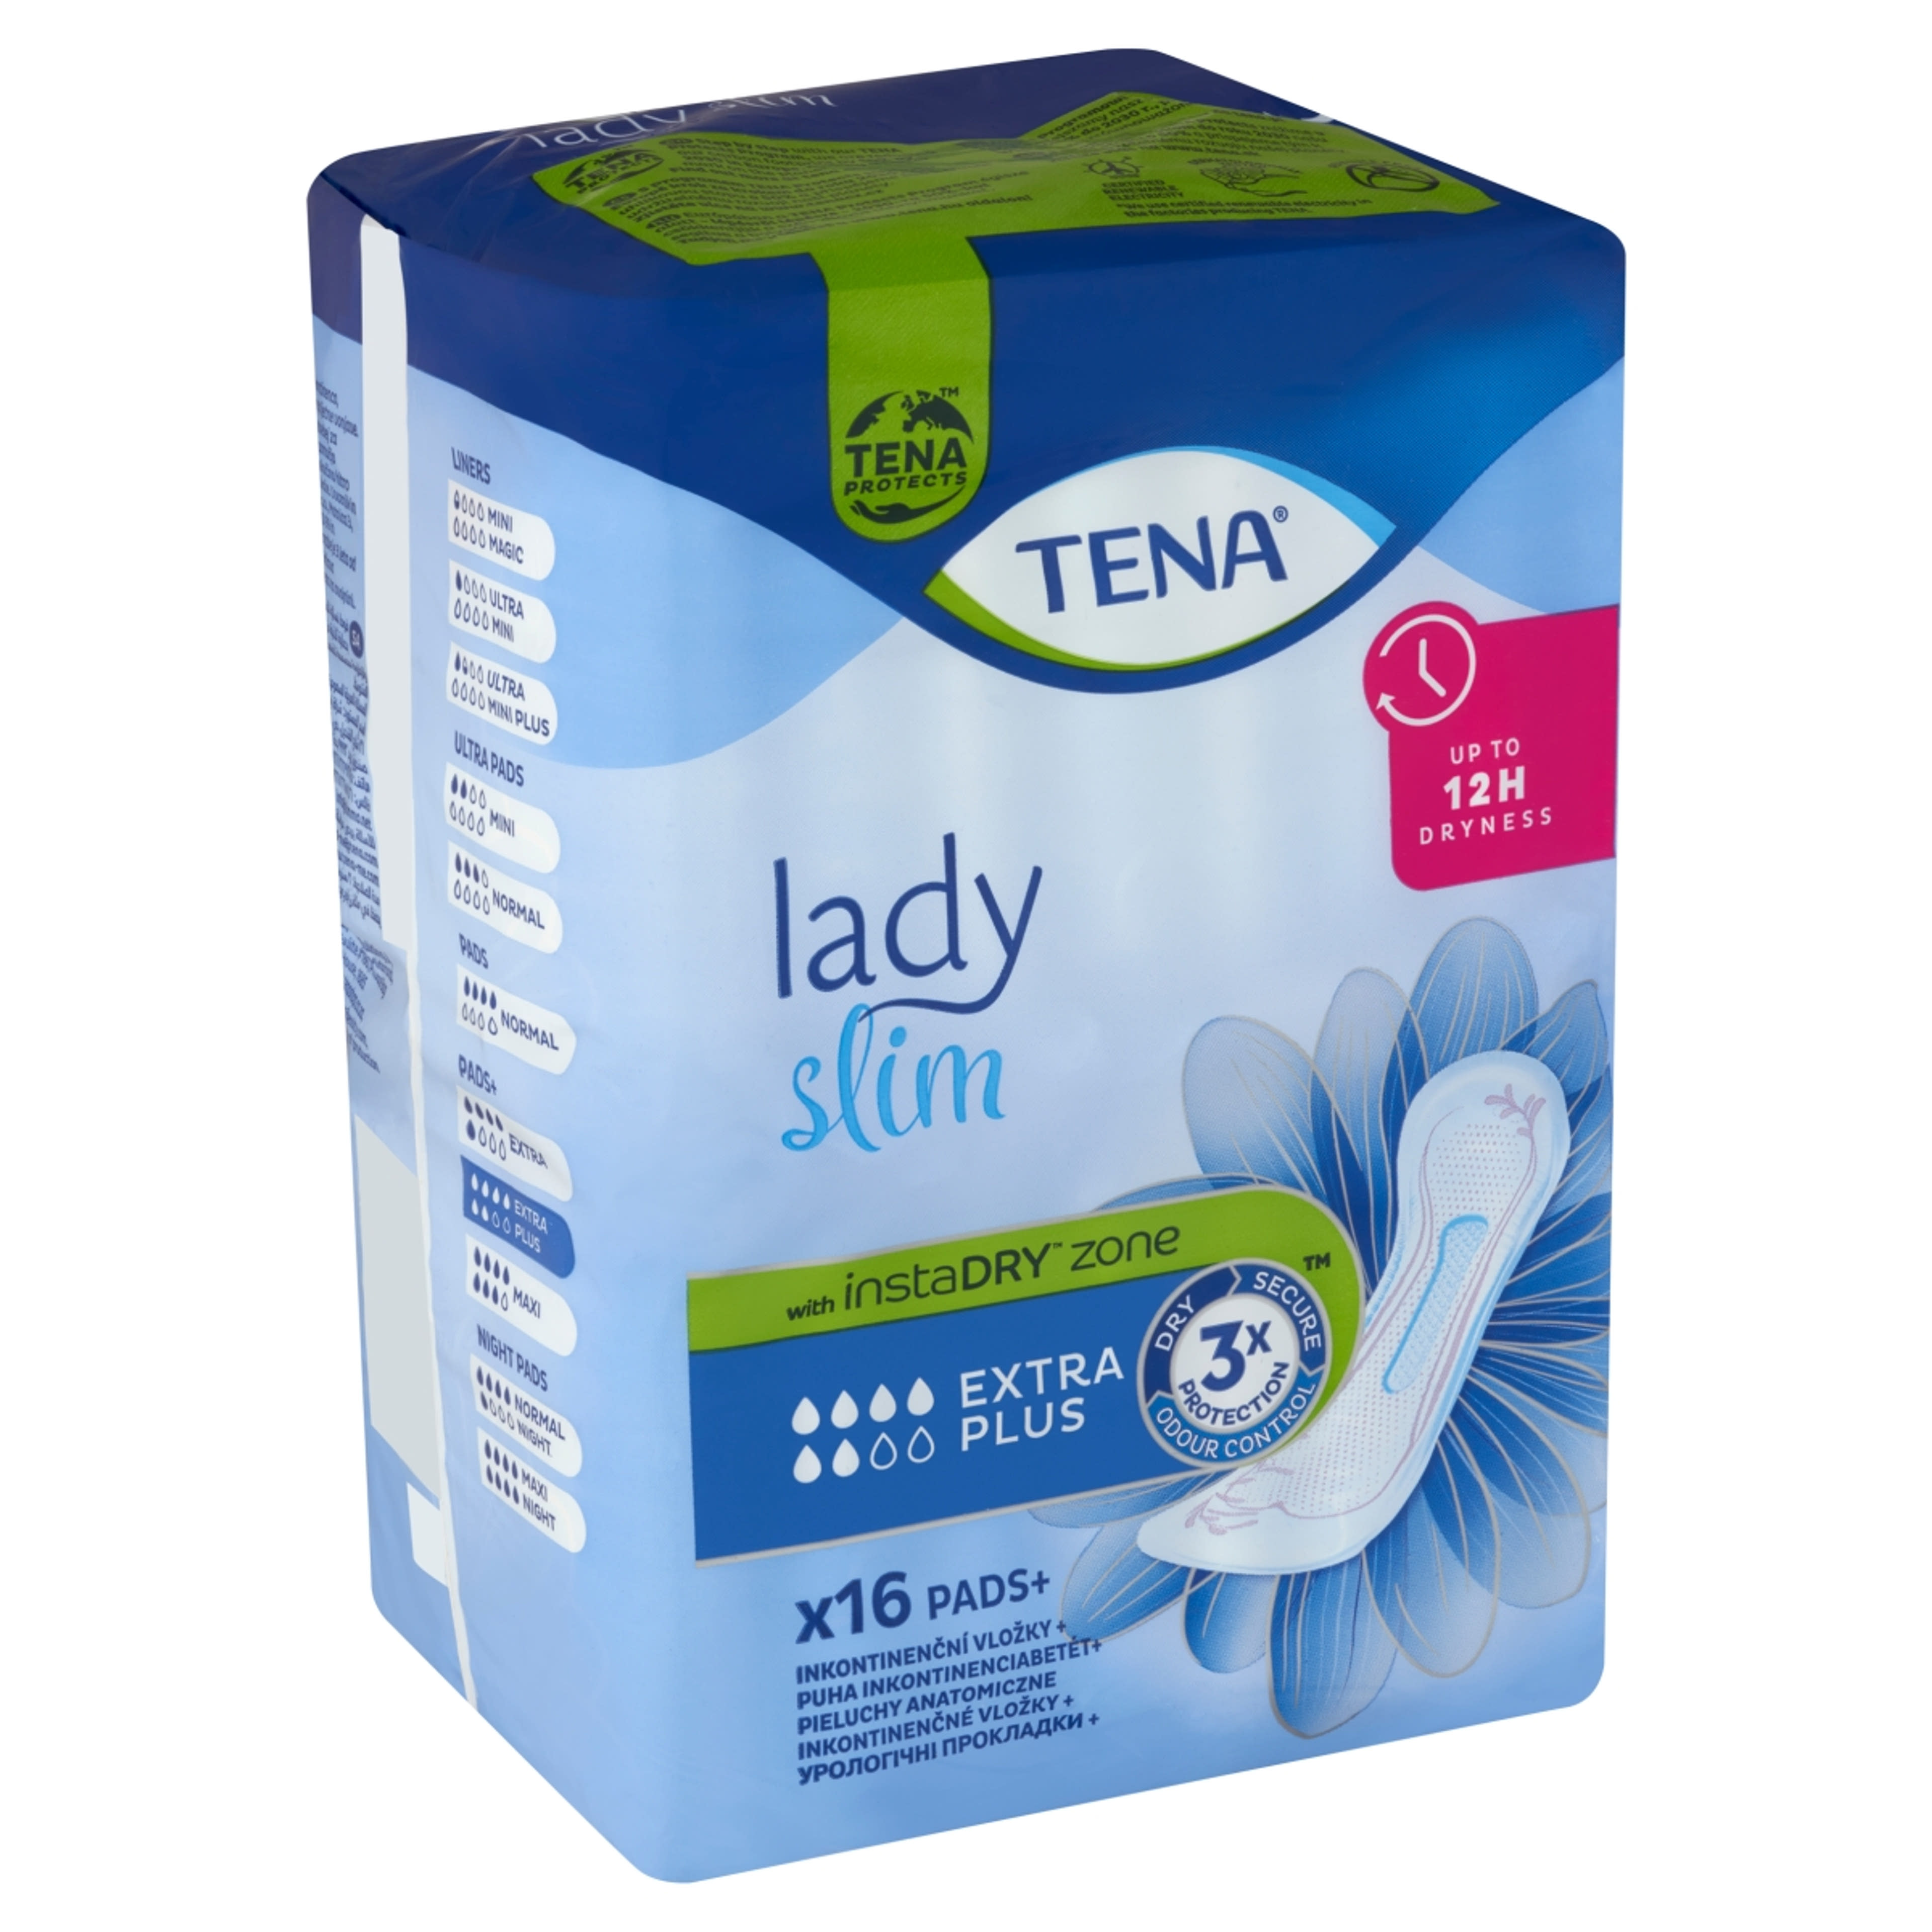 Tena Lady inkontinencia betét extra plus - 16 db-2